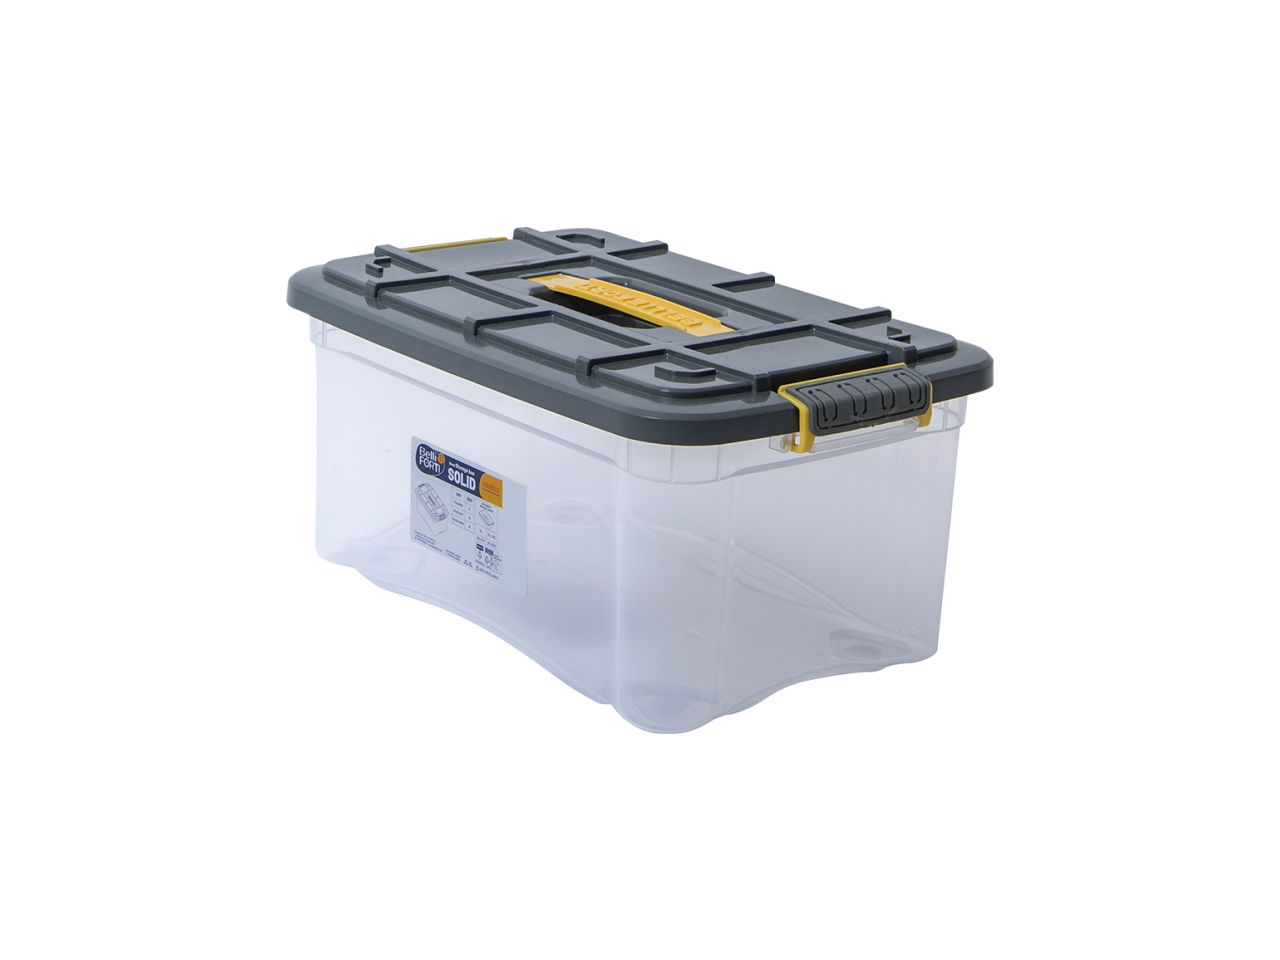 Storage box solid handle capacita' 10l misura 370x255x170mm colore grigio